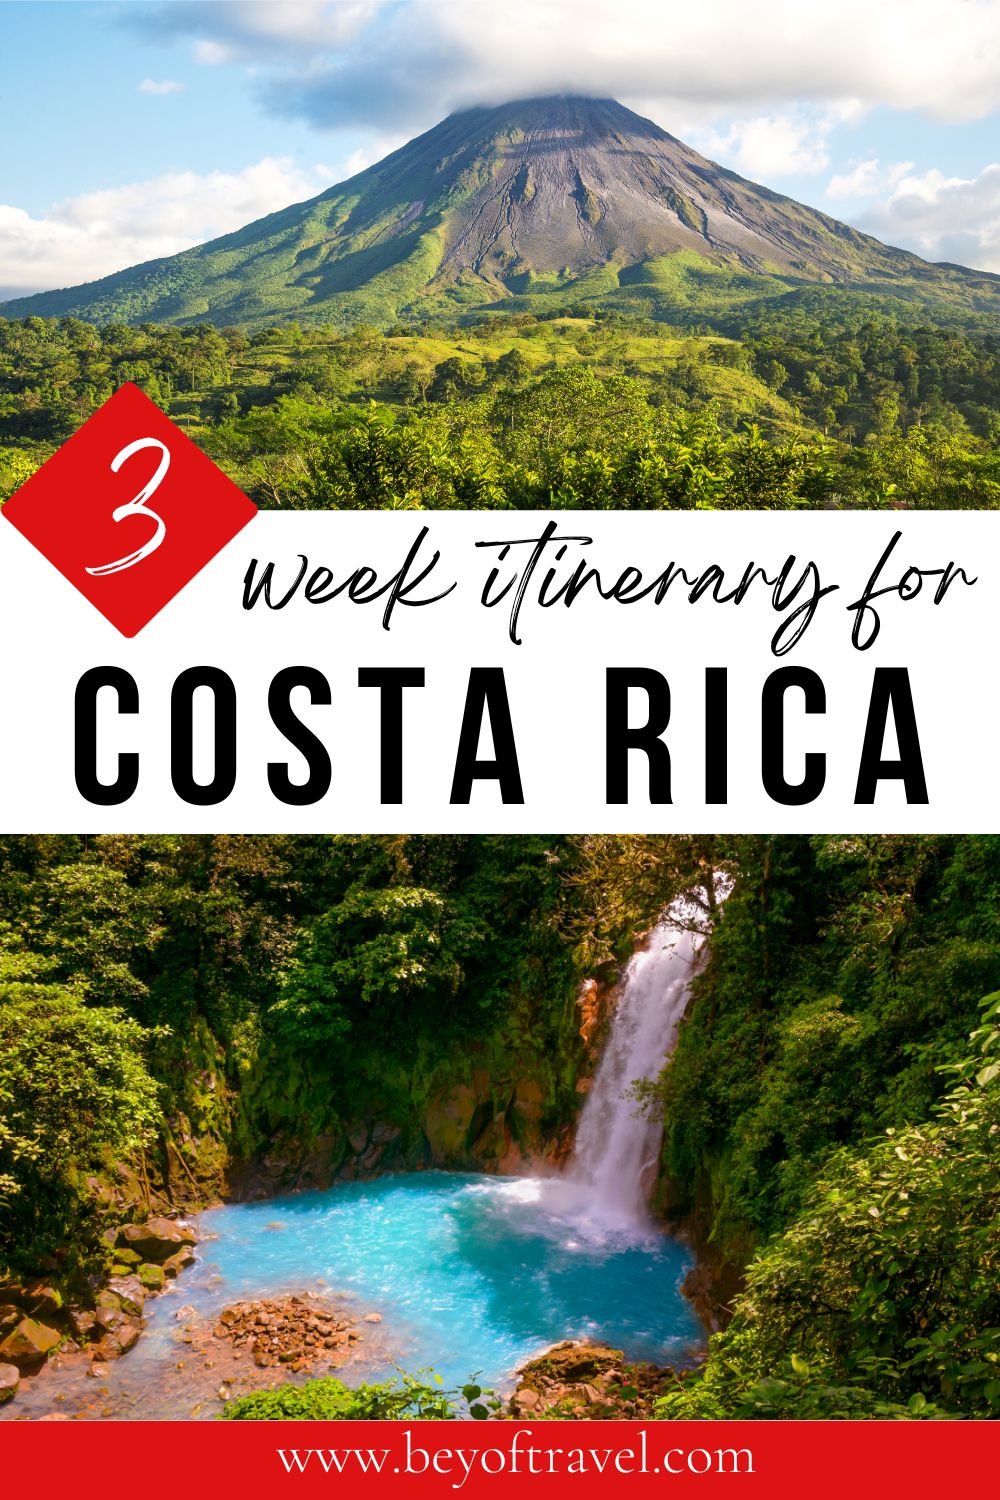 Costa Rica 3 week itinerary pin